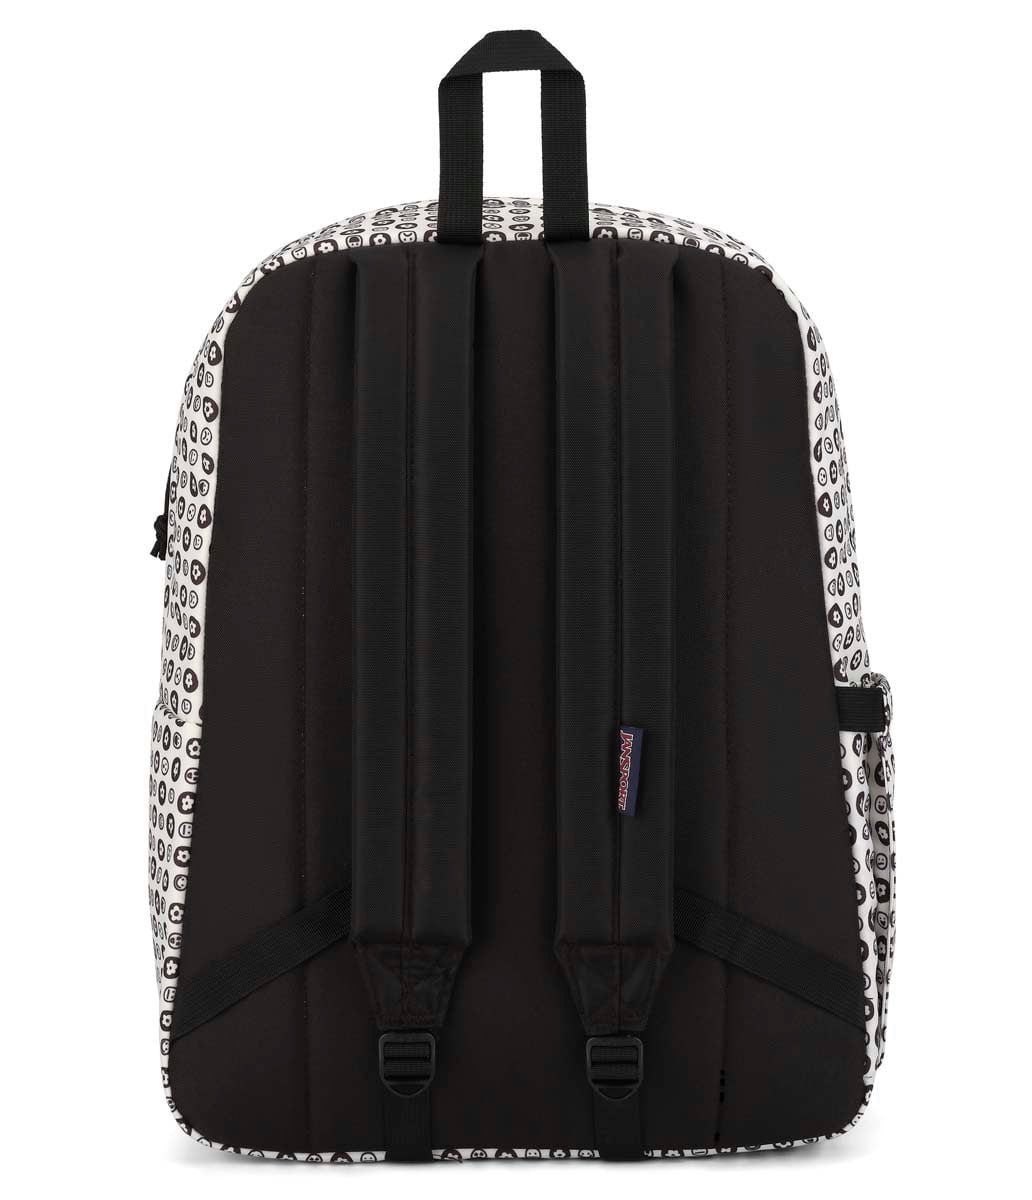 JanSport SuperBreak Plus Laptop Backpack - All The Feels